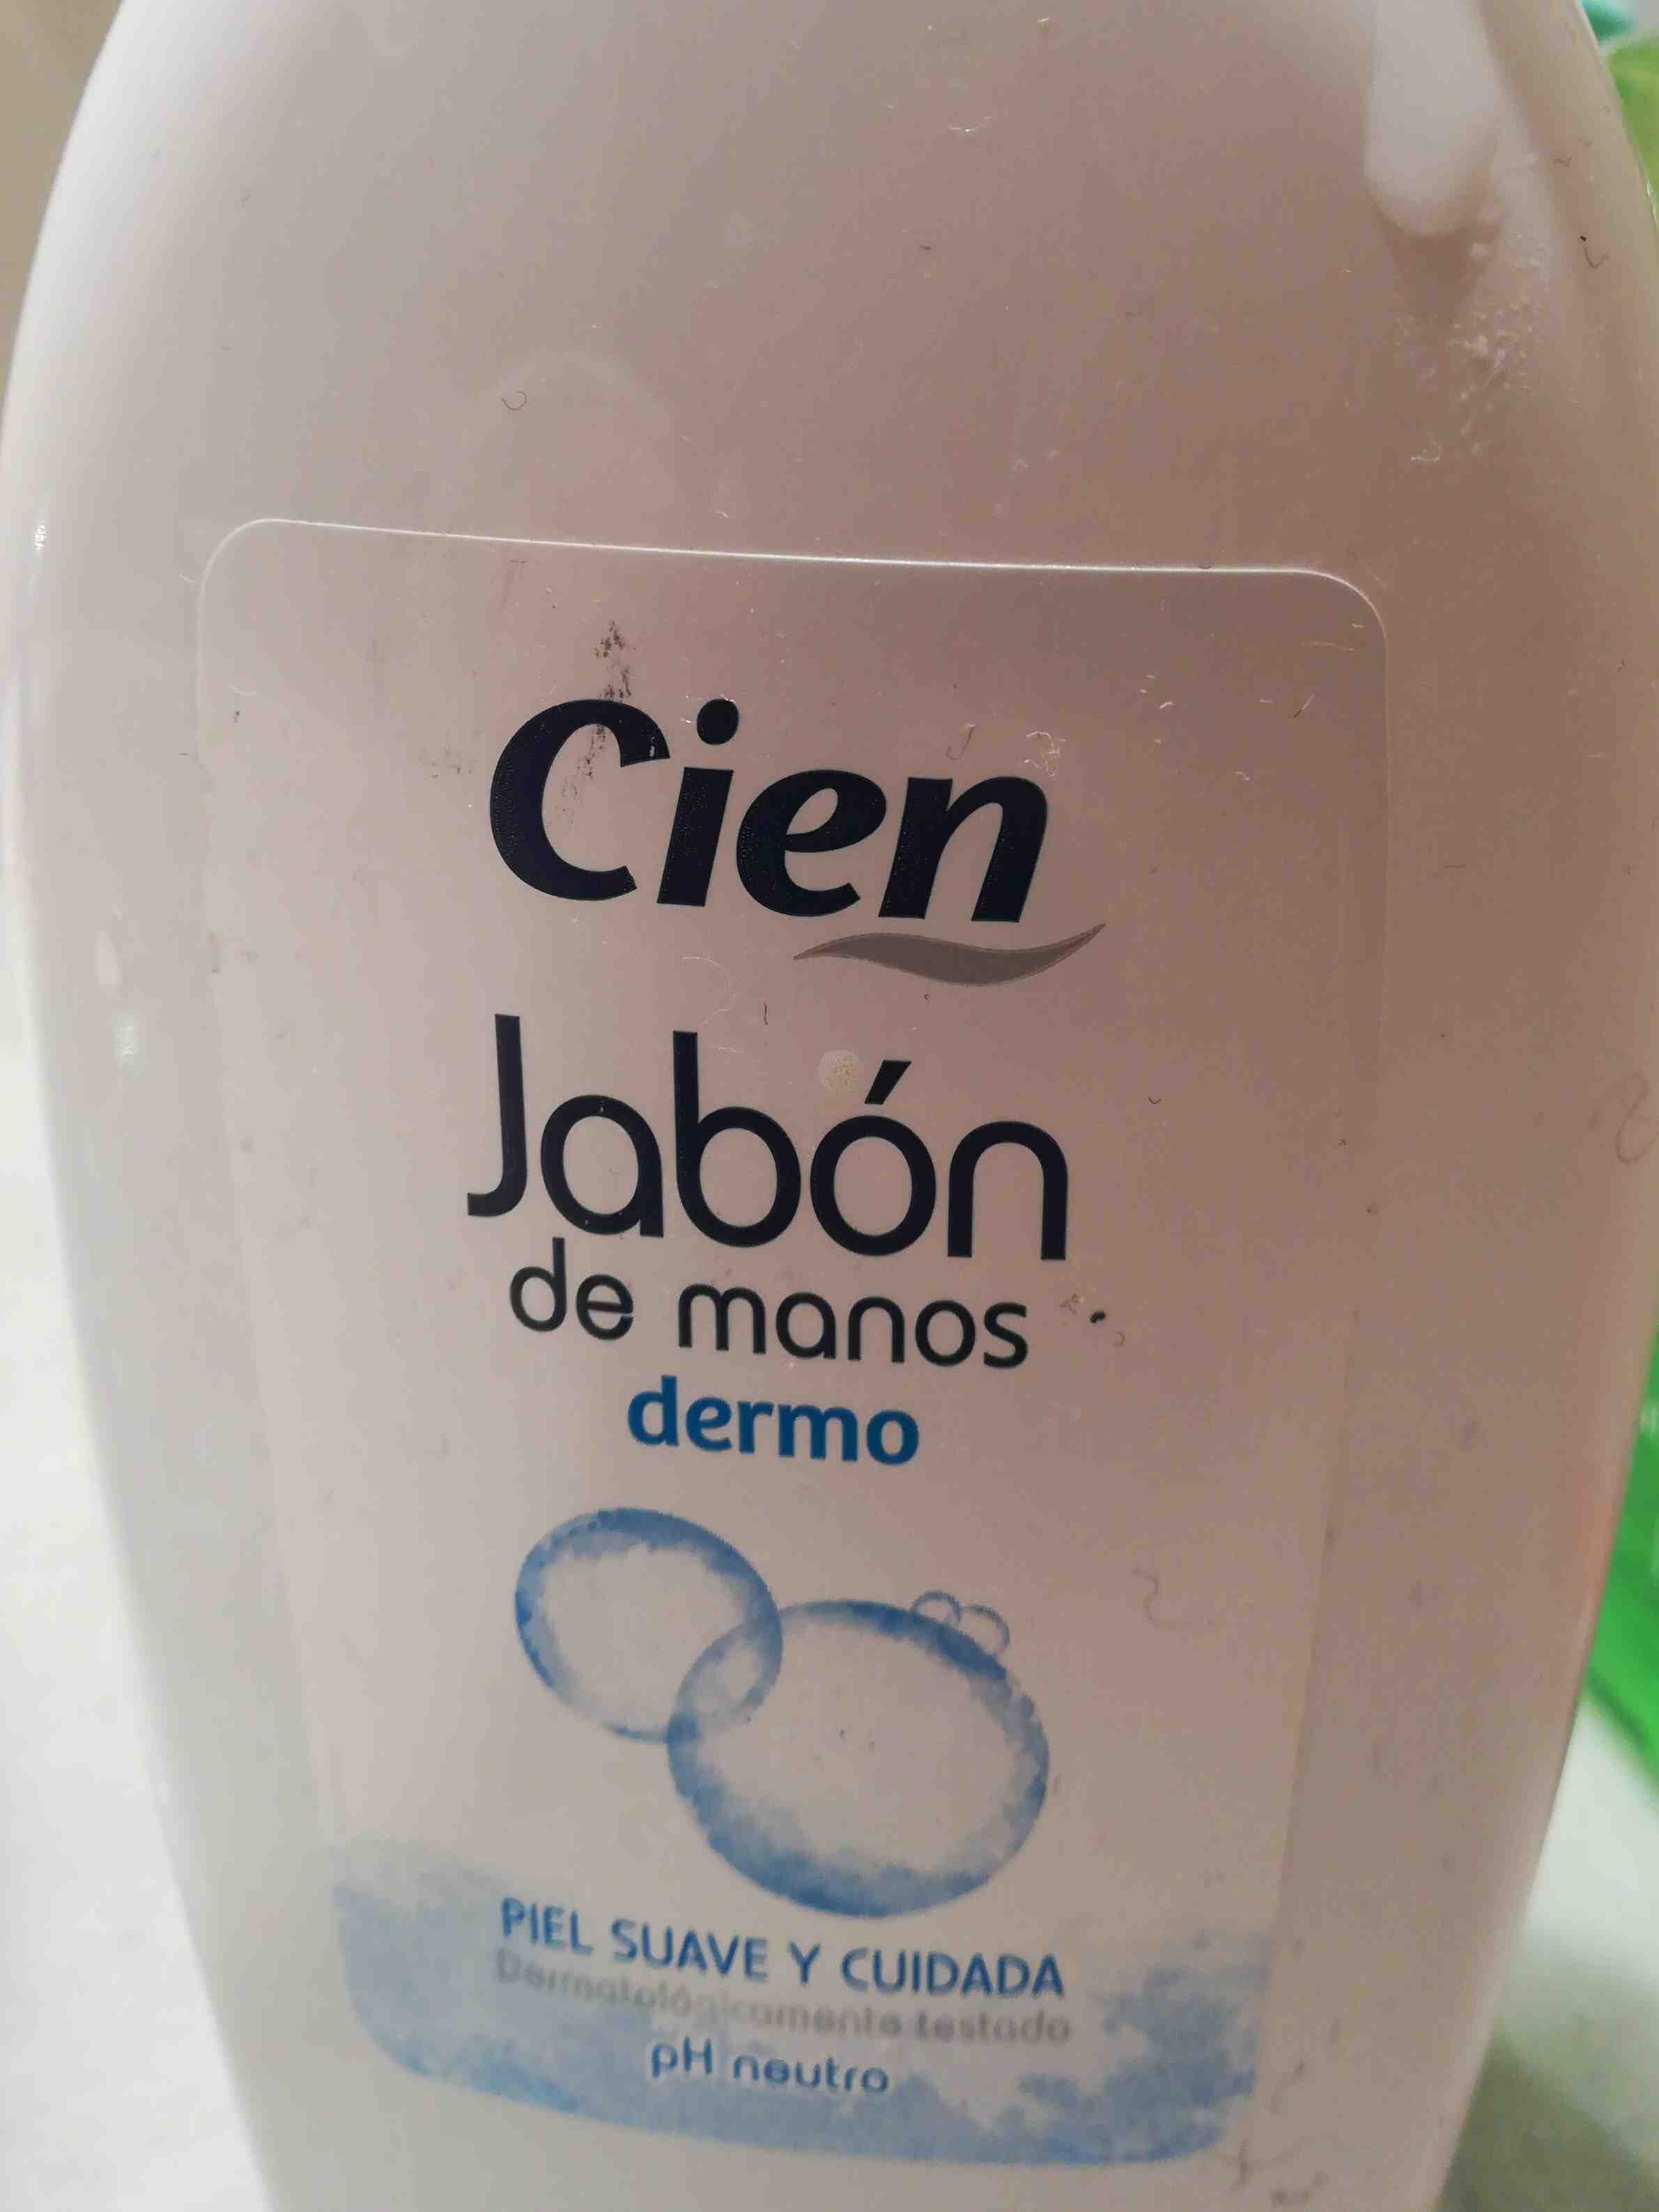 Jabon de manos - מוצר - en